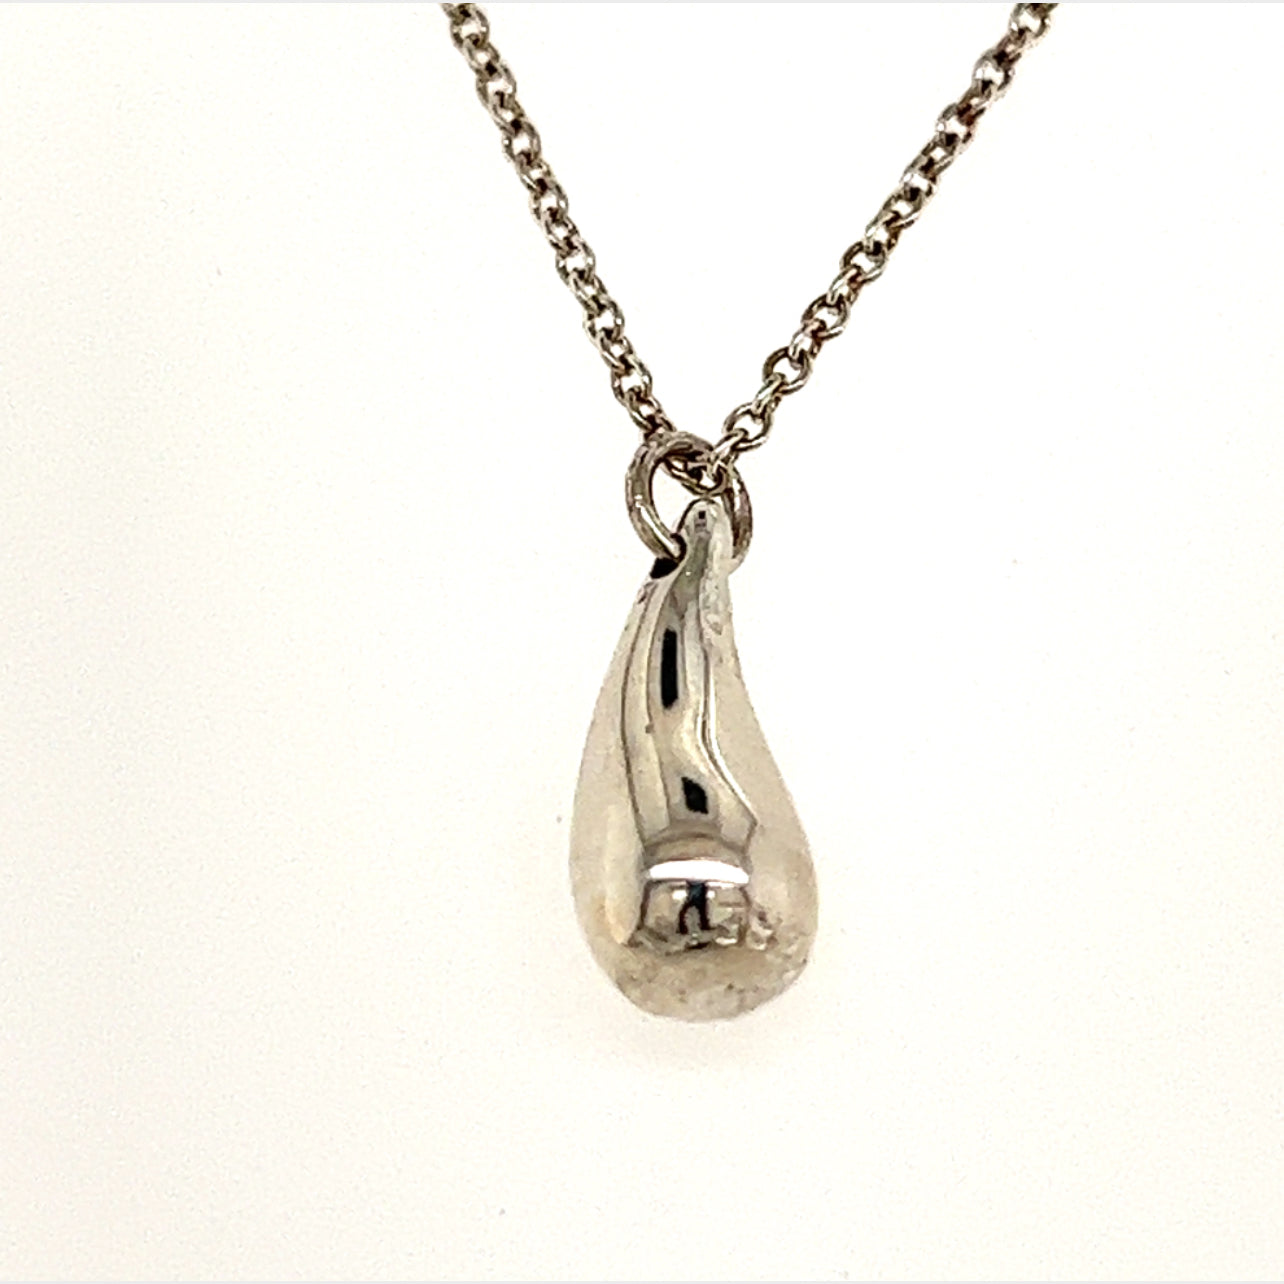 Tiffany & Co Estate Tear Drop Pendant Silver Necklace 17" By Elsa Peretti TIF228 - Certified Fine Jewelry